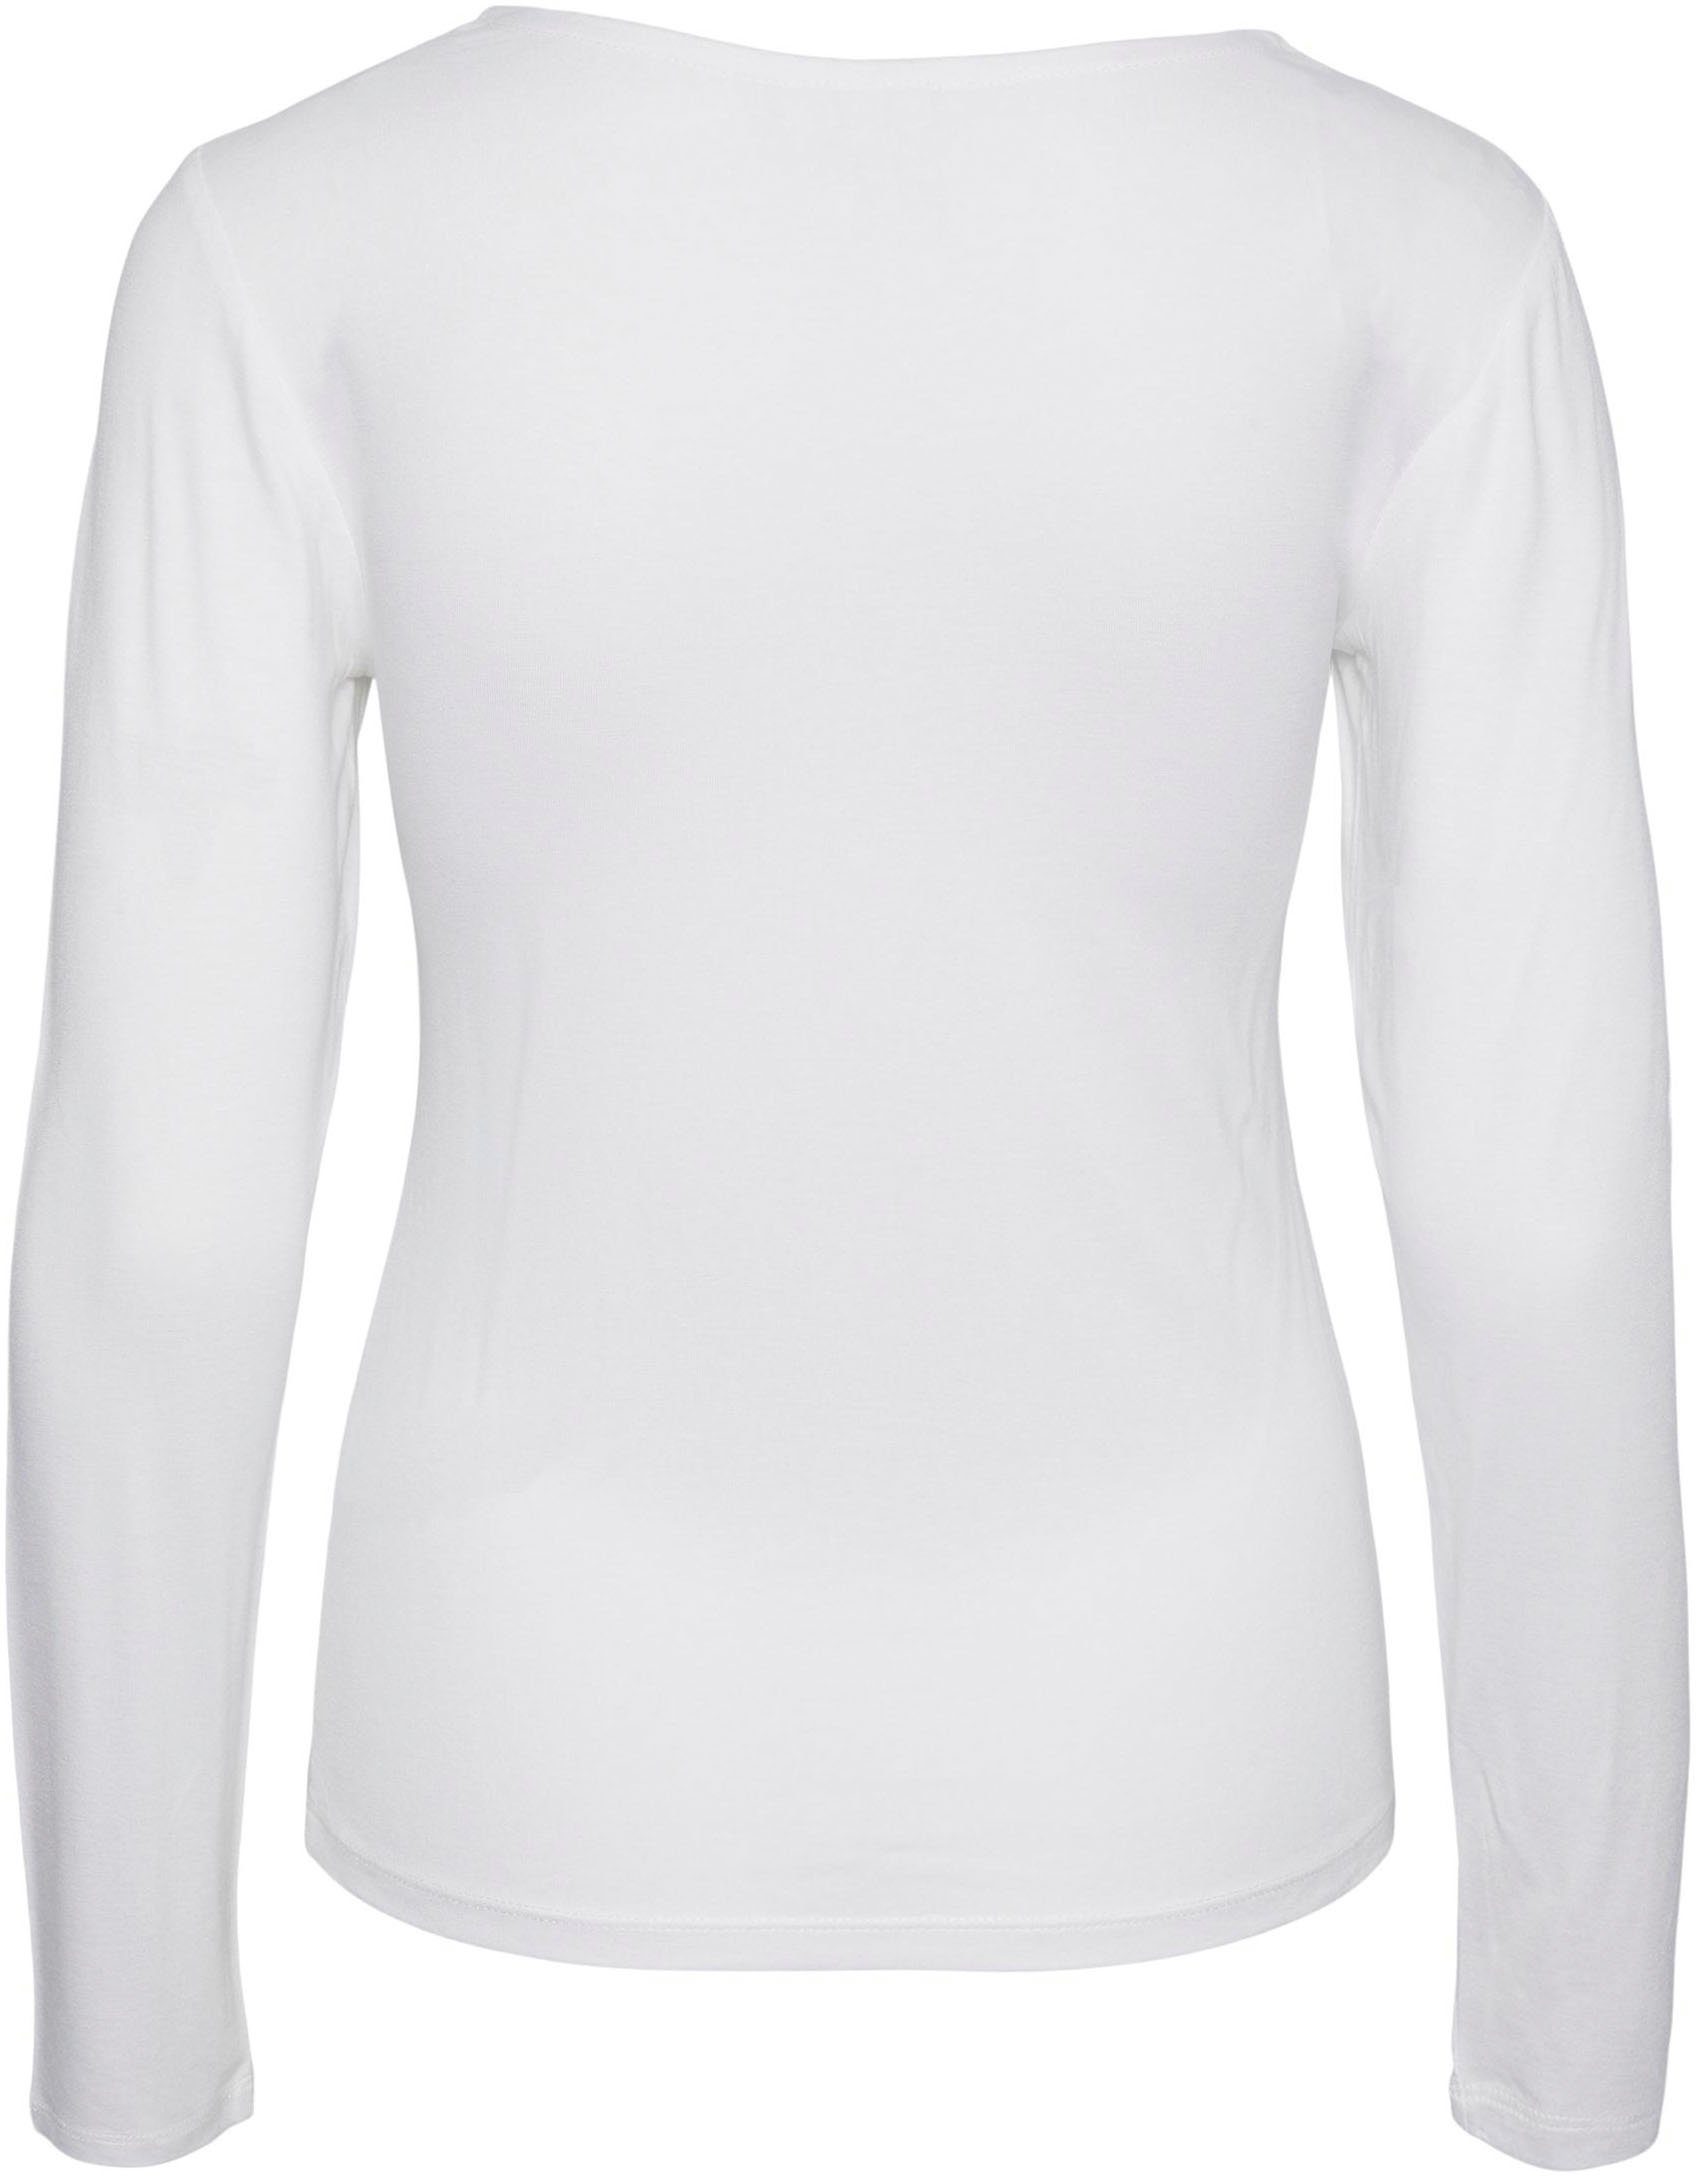 TOP NOOS V-Shirt pieces LS White LACE Bright PCBARBERA BC